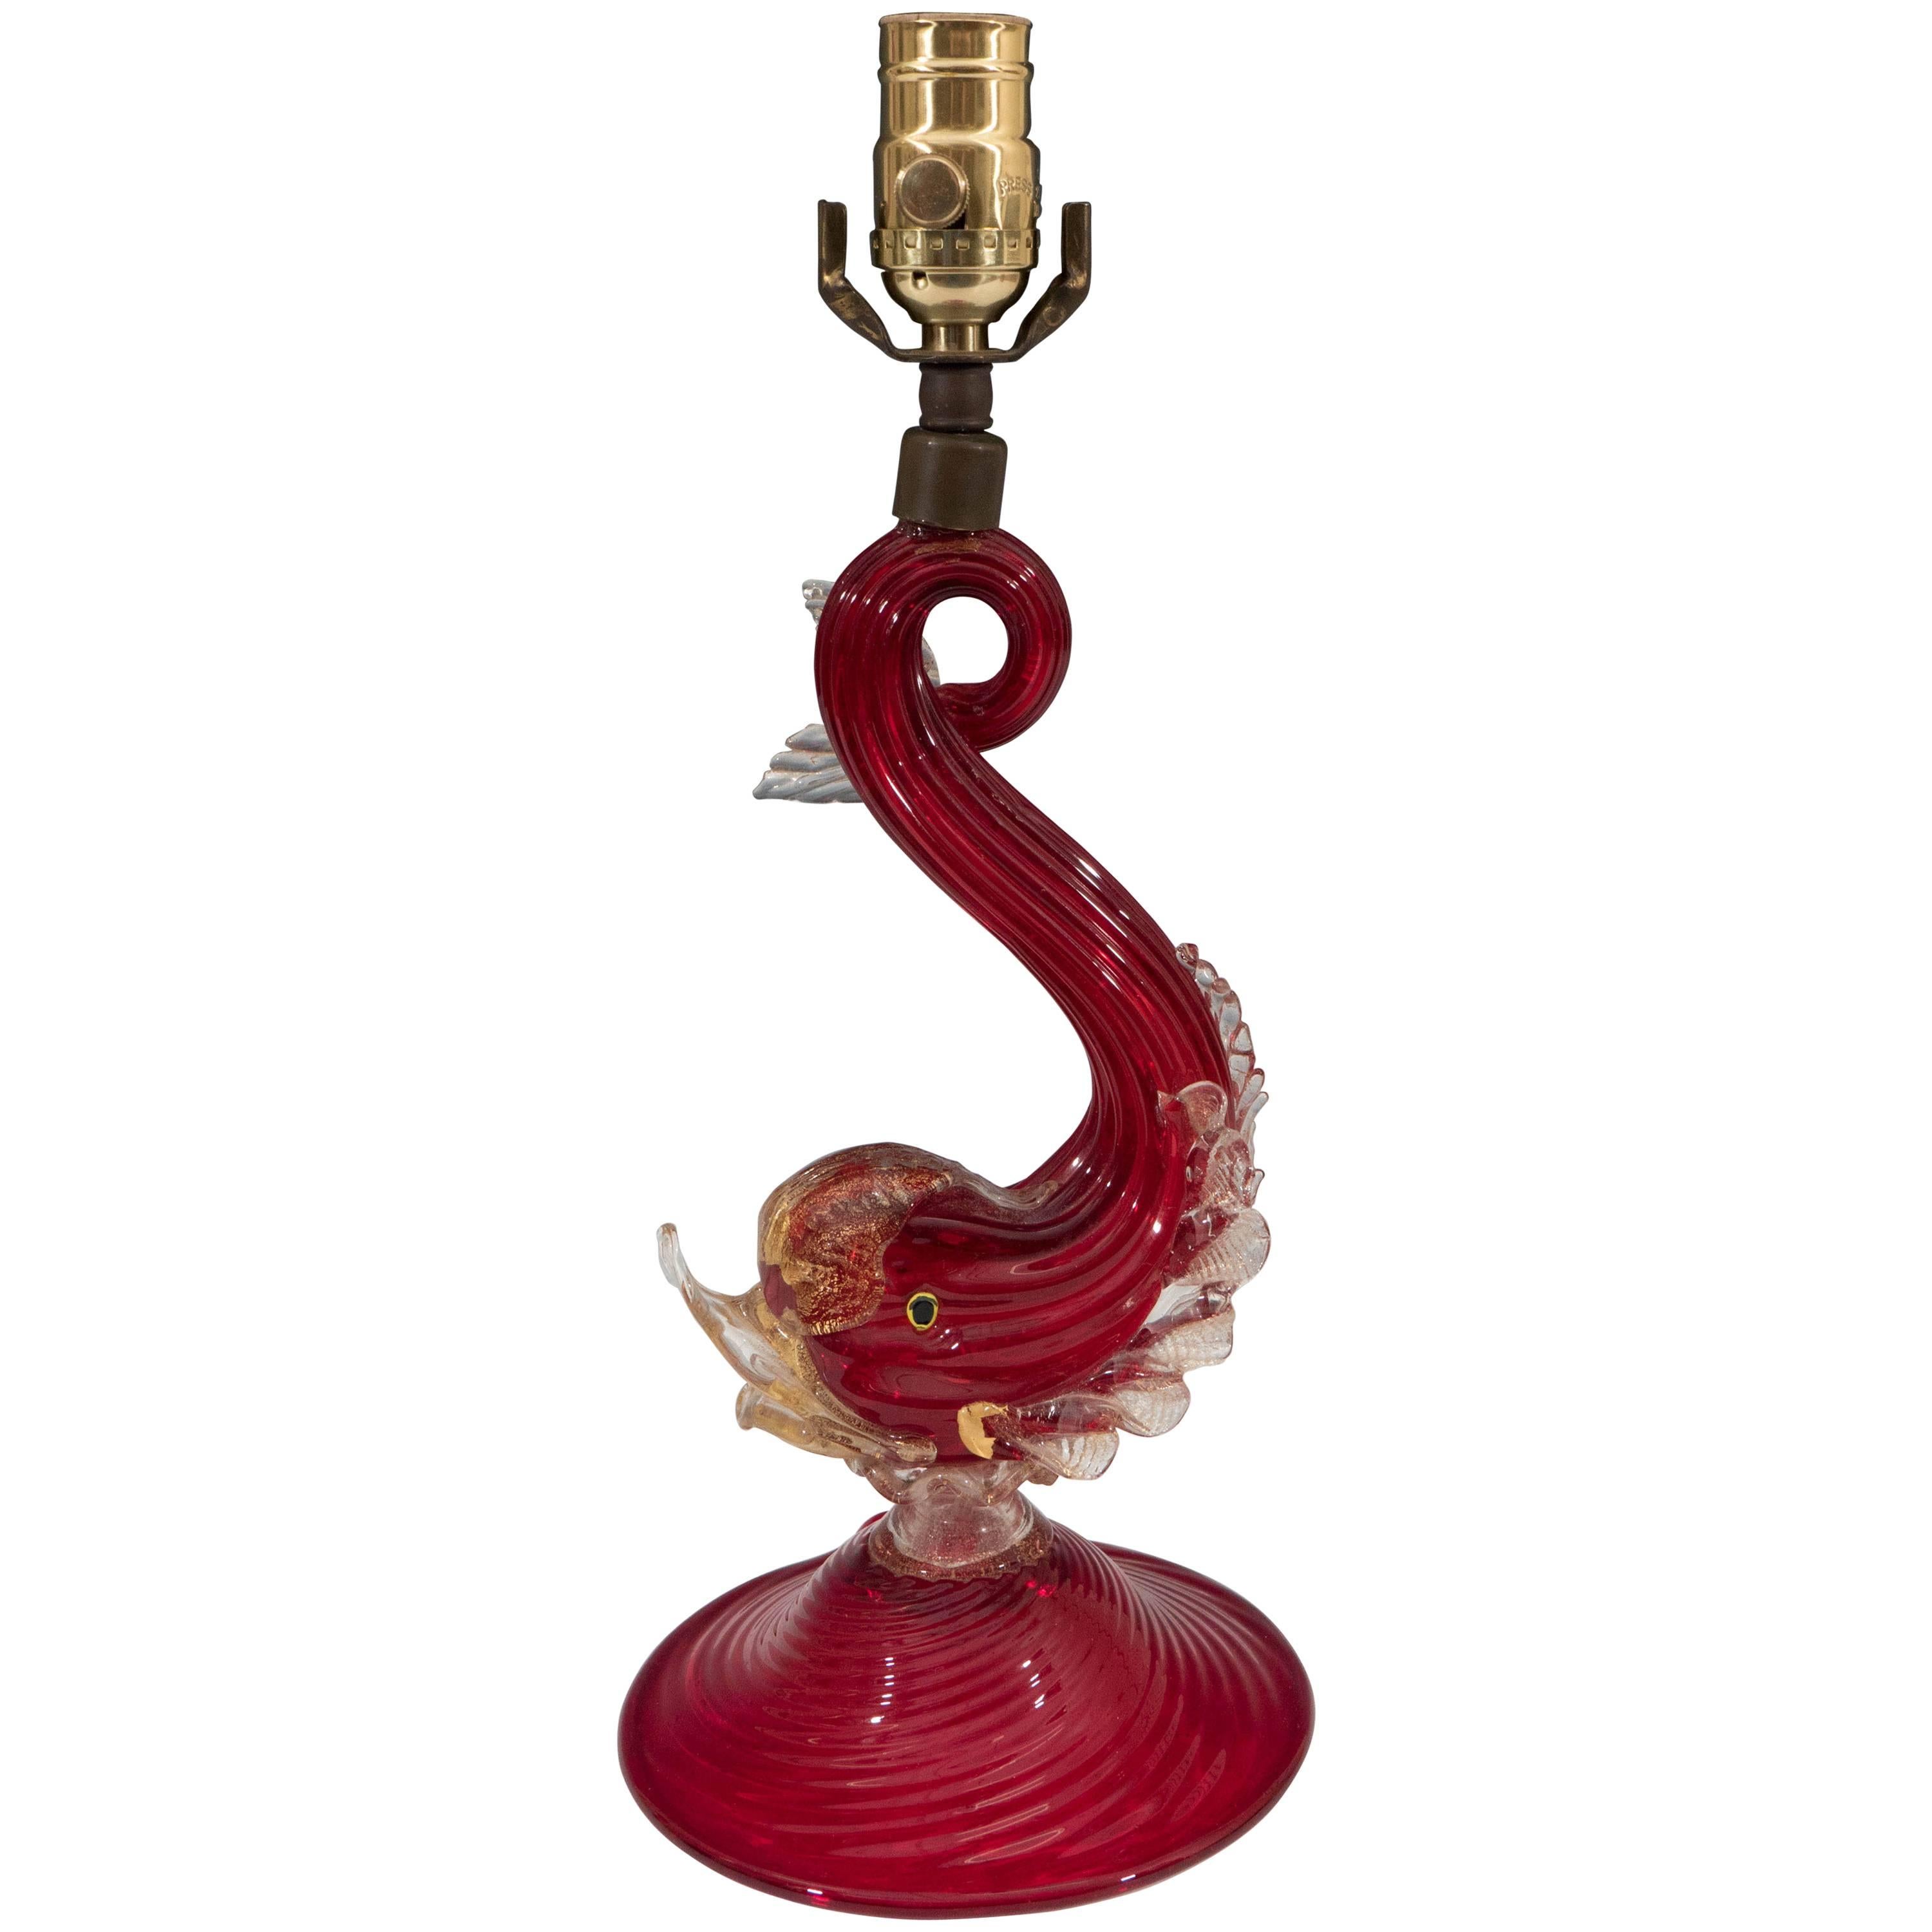 Lampe en forme de poisson en verre de Murano rouge de style Hollywood Regency, attribuée à Barovier e Toso